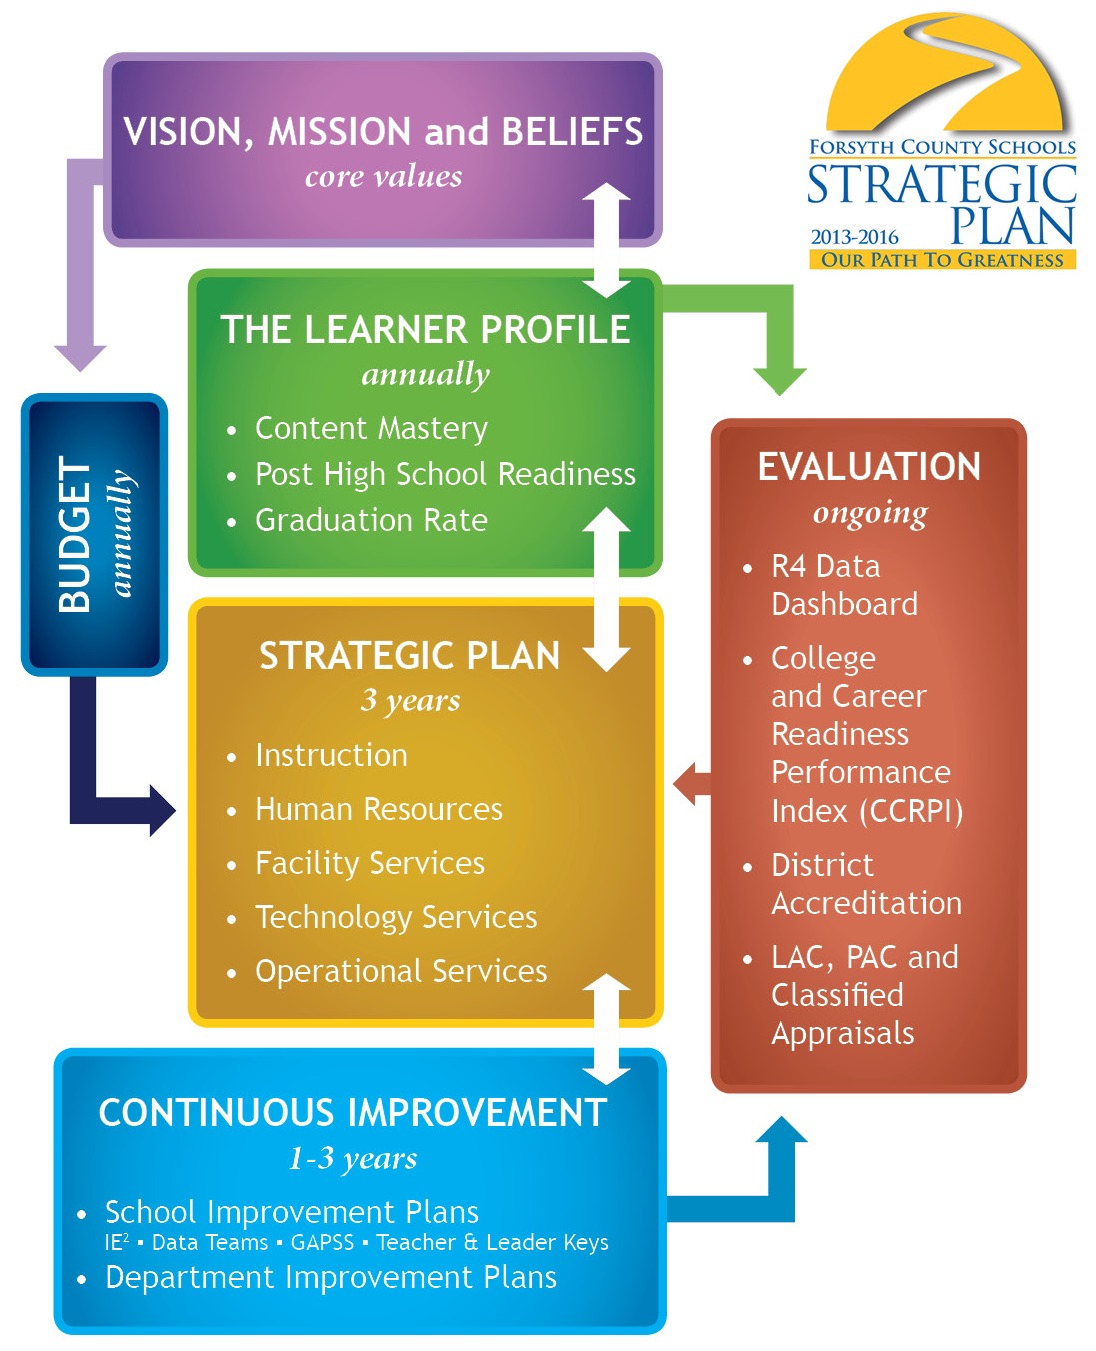 features of strategic planning